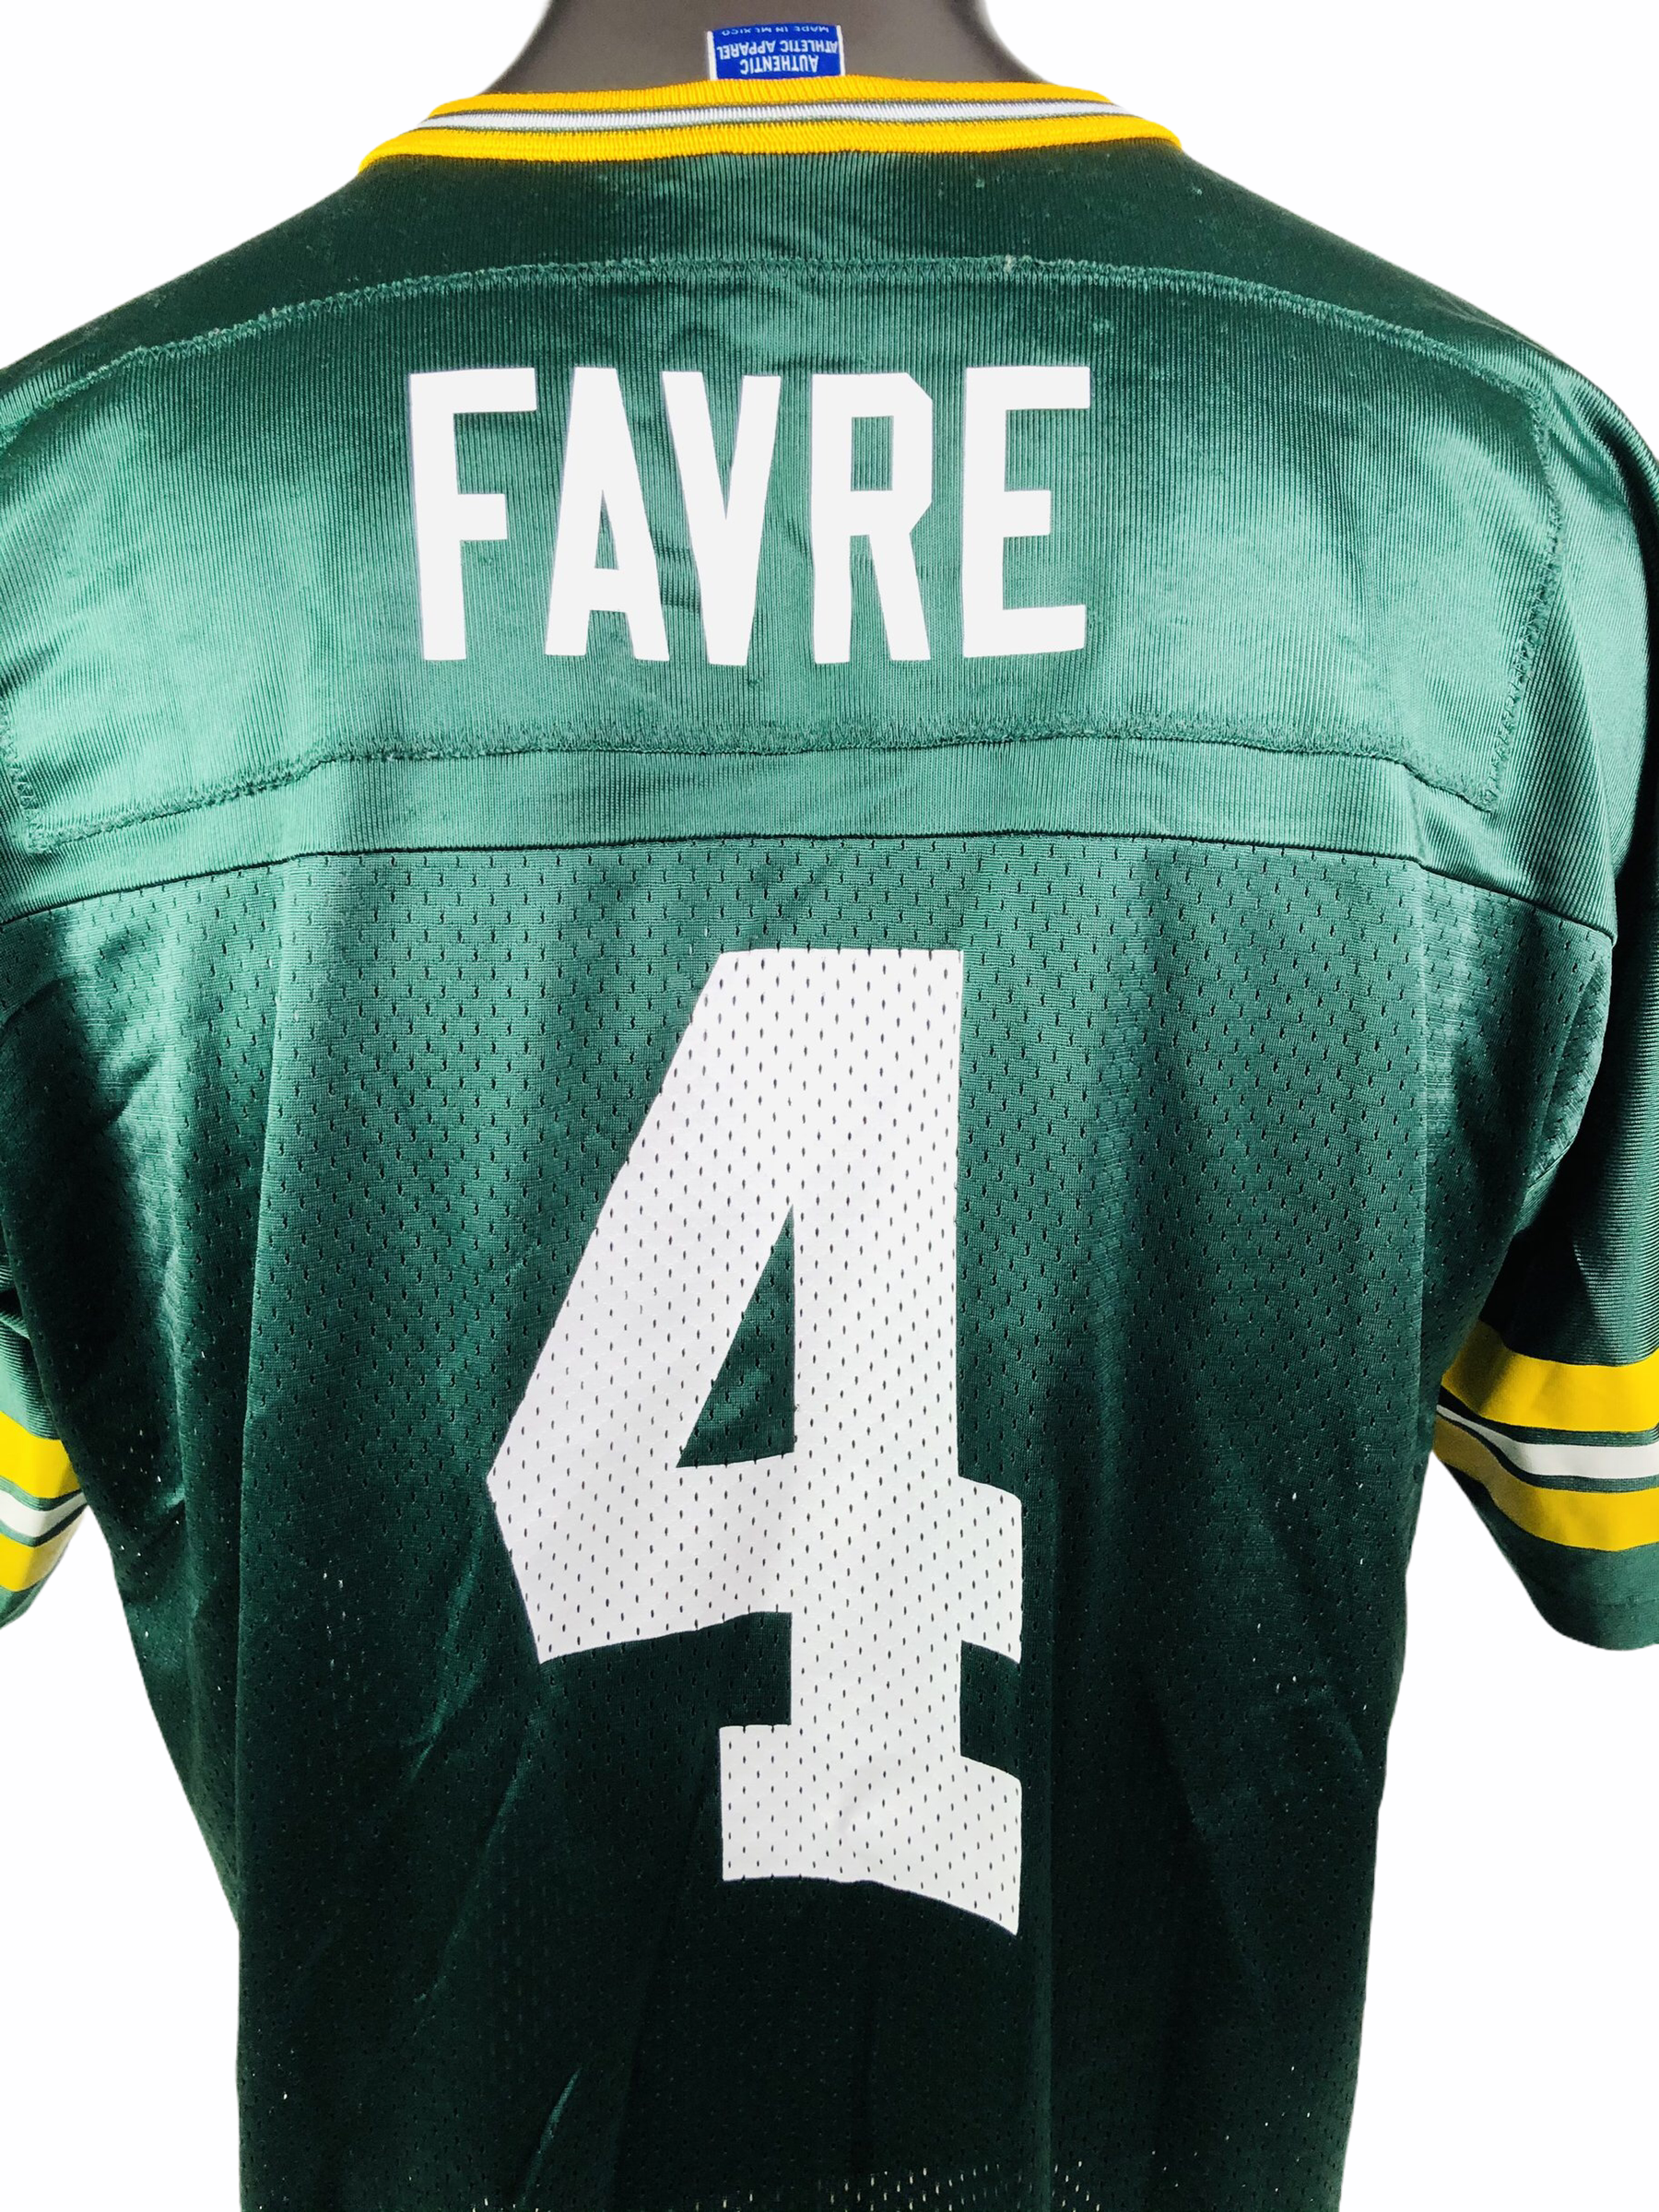 Brett Favre Authentic New York Jets Jersey by Reebok, Green, size